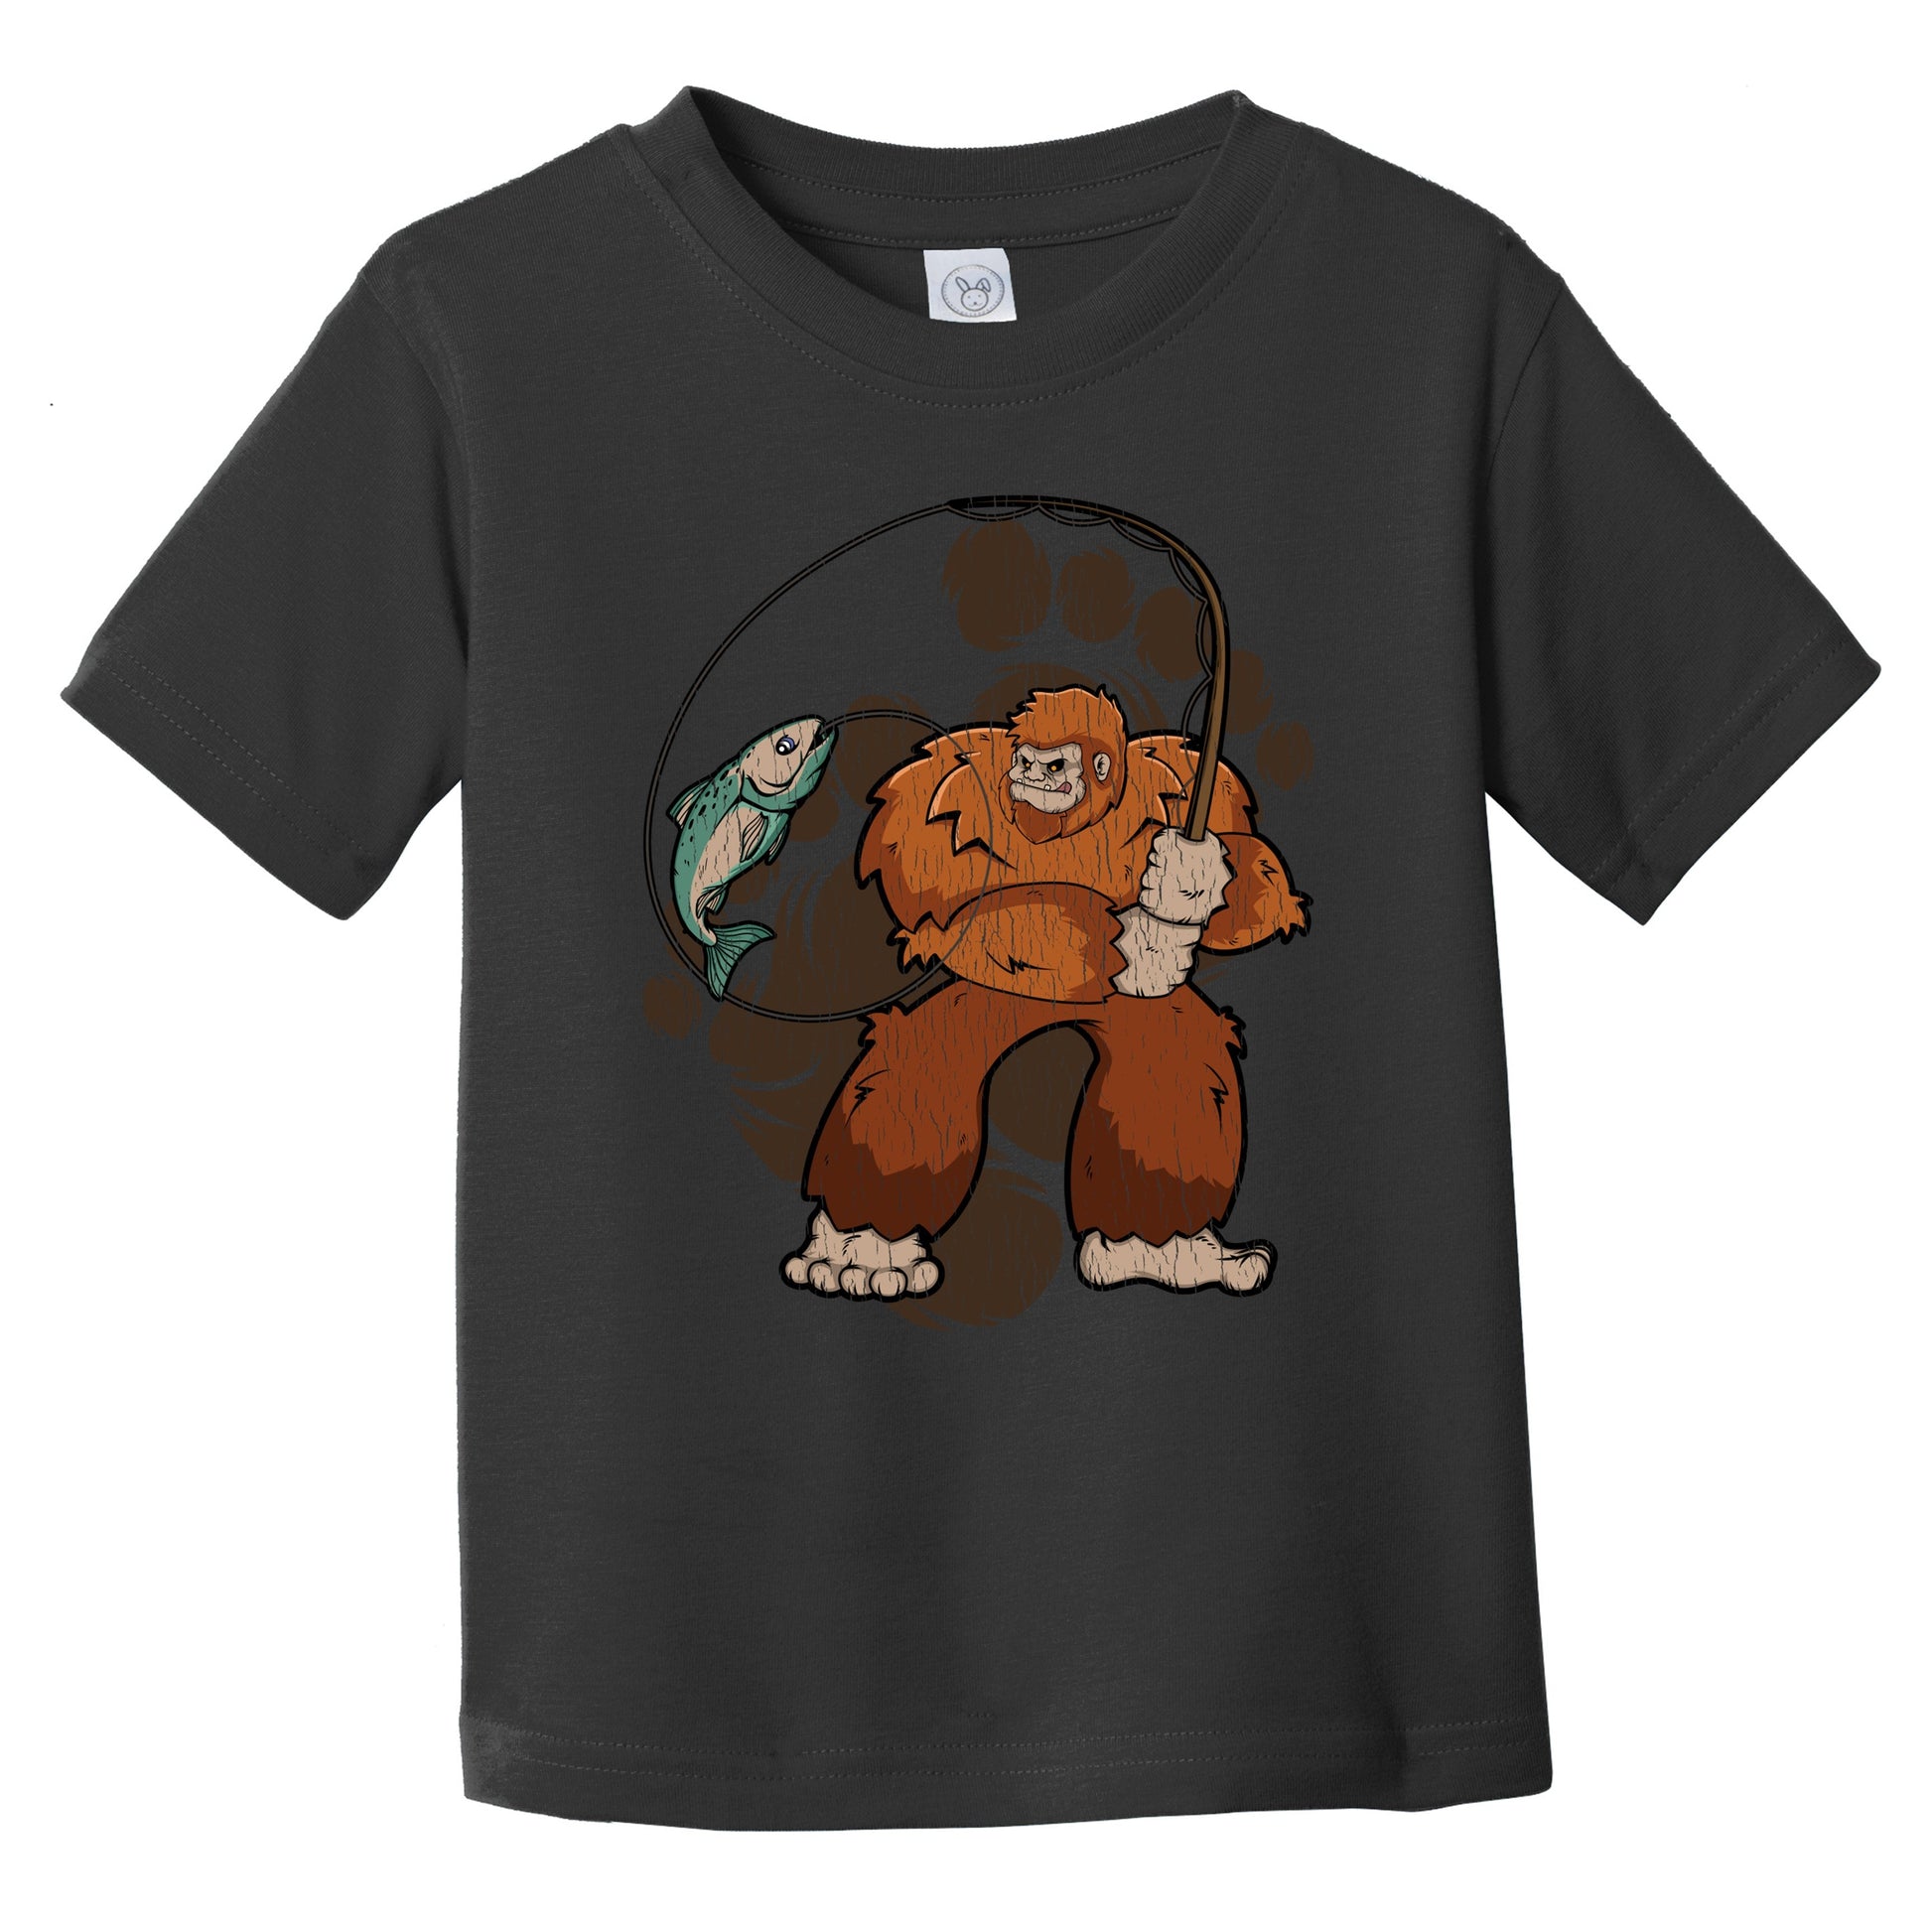 Toddler Bigfoot Fishing Shirt - Sasquatch Catching A Fish Infant Toddler T-Shirt 4T / Navy